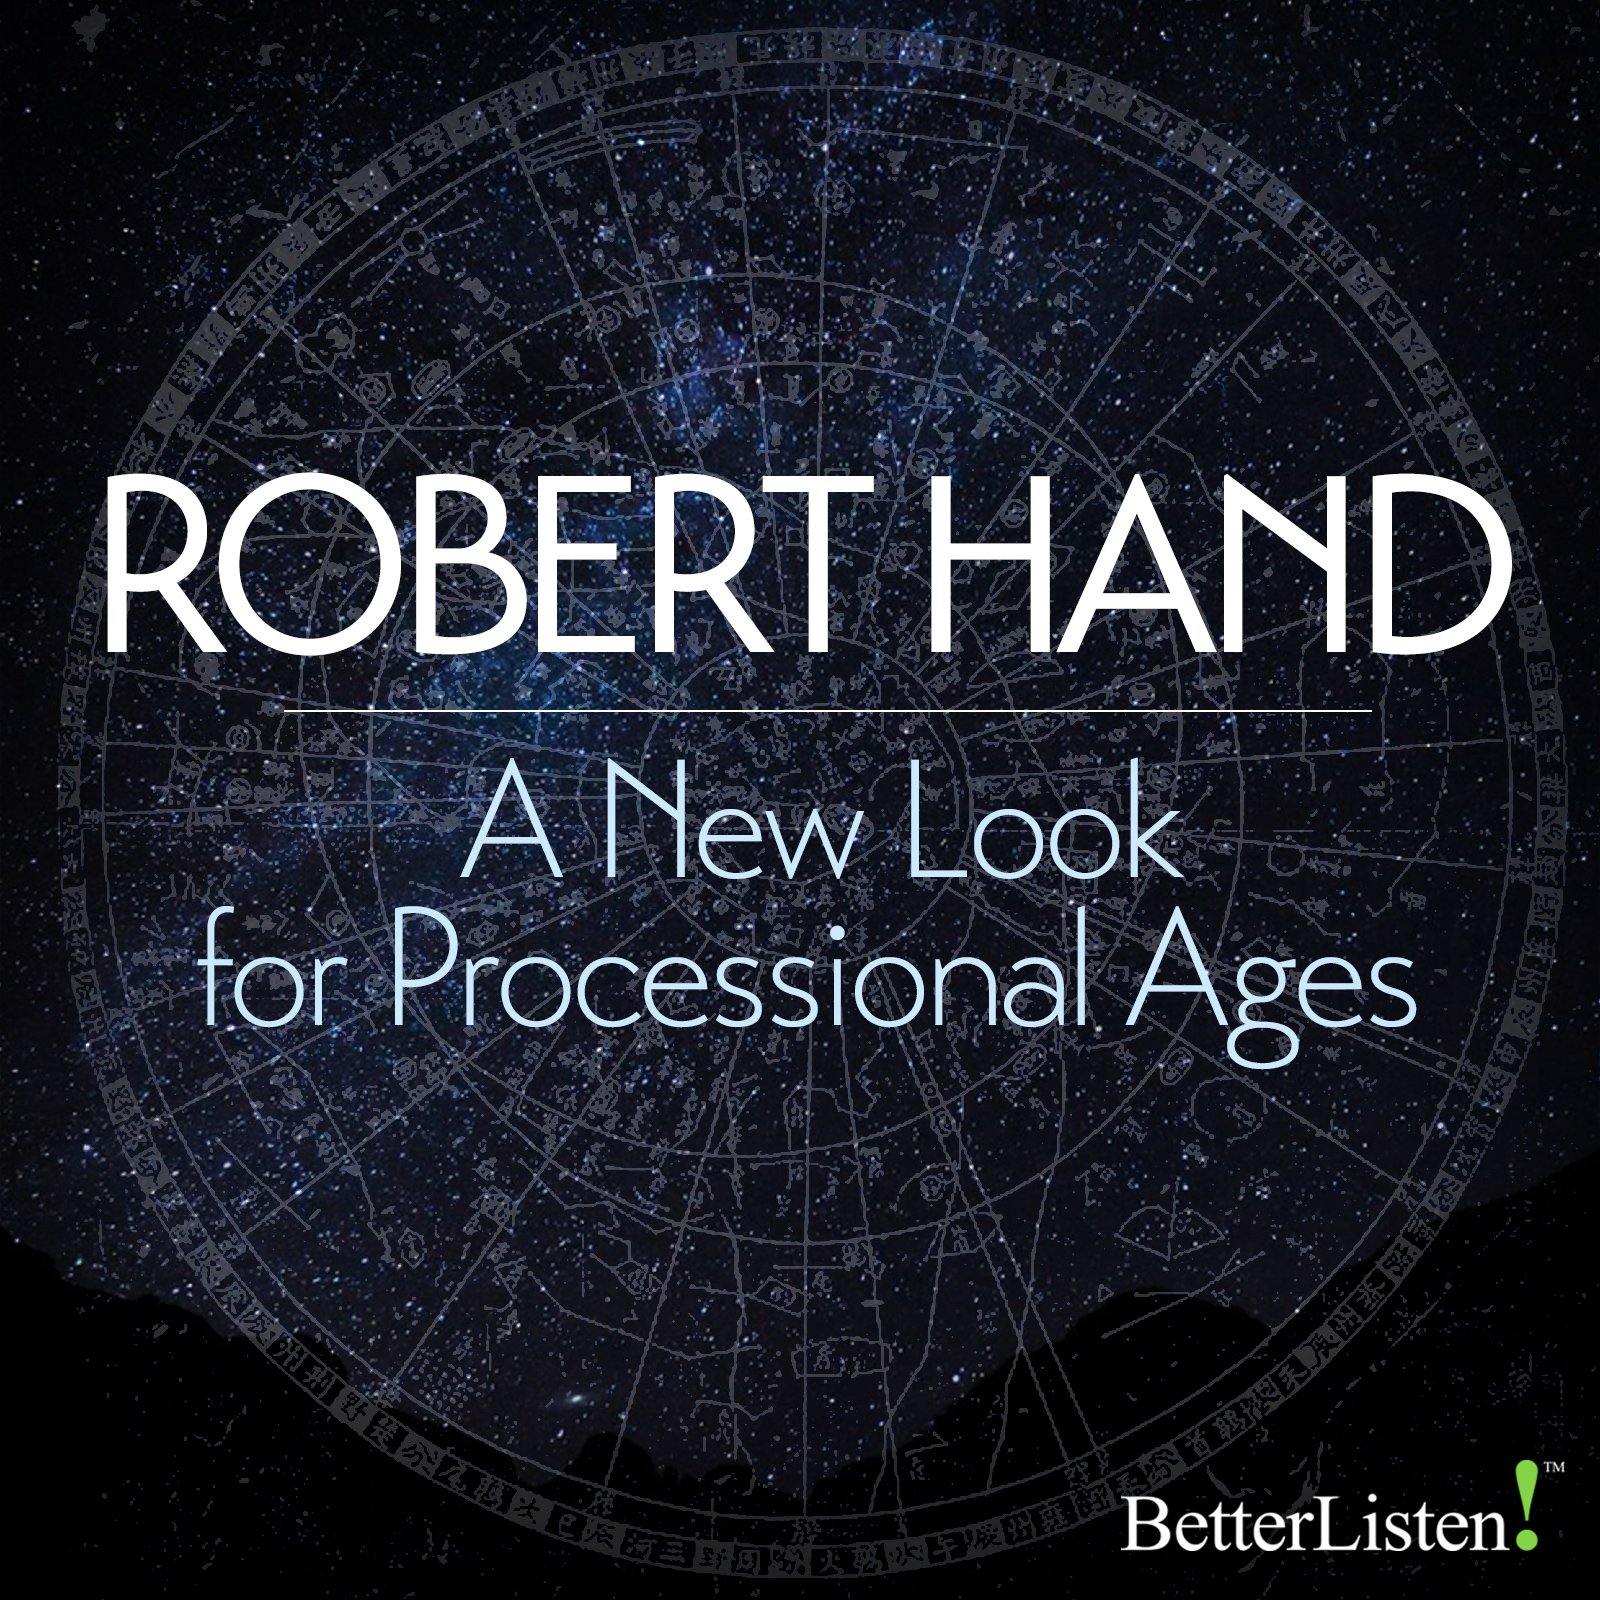 A New Look For Processional Ages with Robert Hand Audio Program BetterListen! - BetterListen!